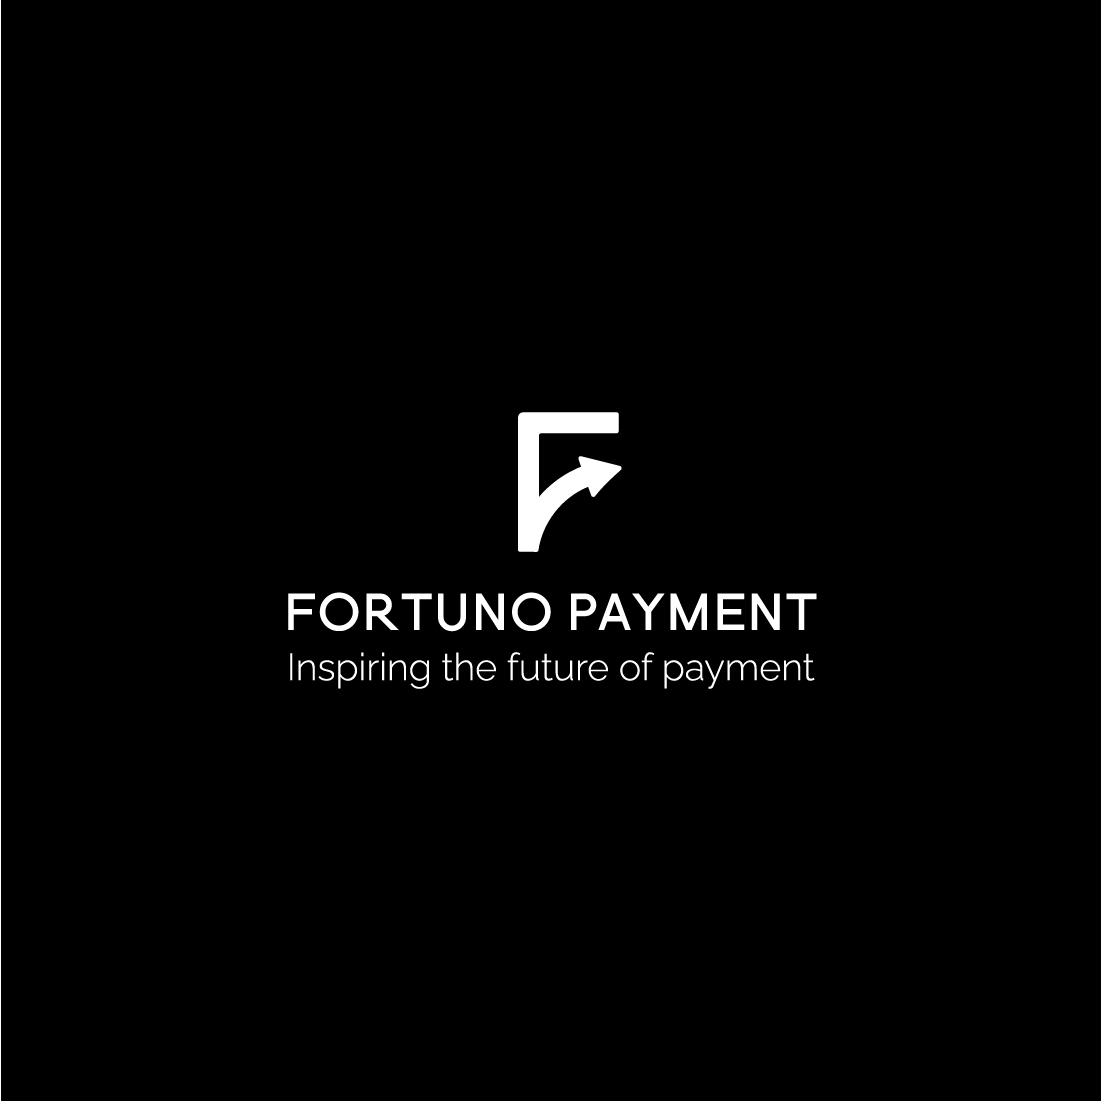 payment logo, F logo, finance logo preview image.